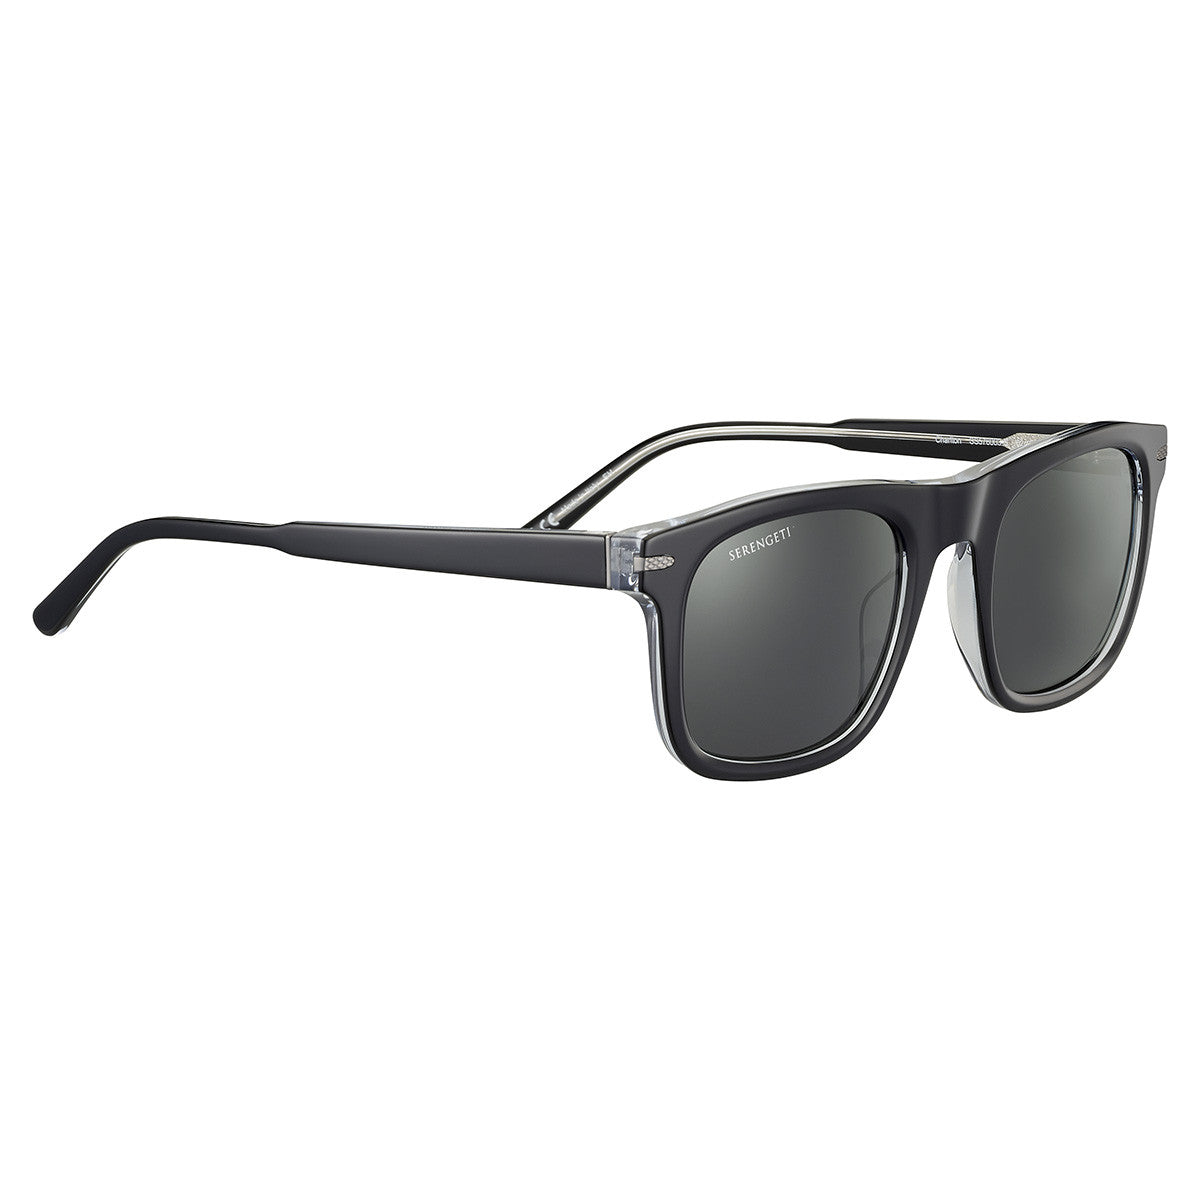 Serengeti Charlton Sunglasses  Shiny Black Transparent Layer Medium, Medium-Large